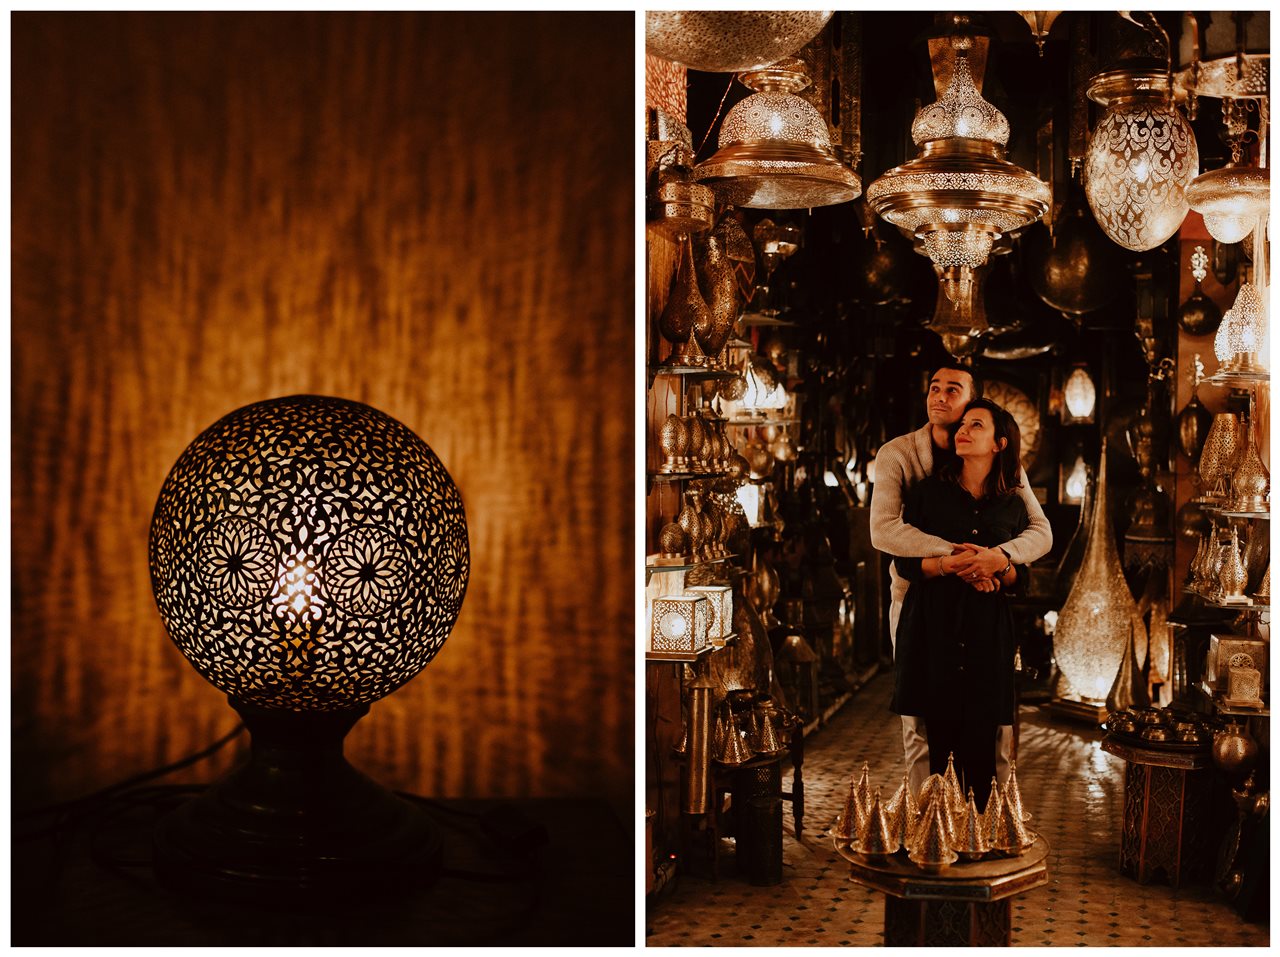 séance couple fès magasin lampe marocaine